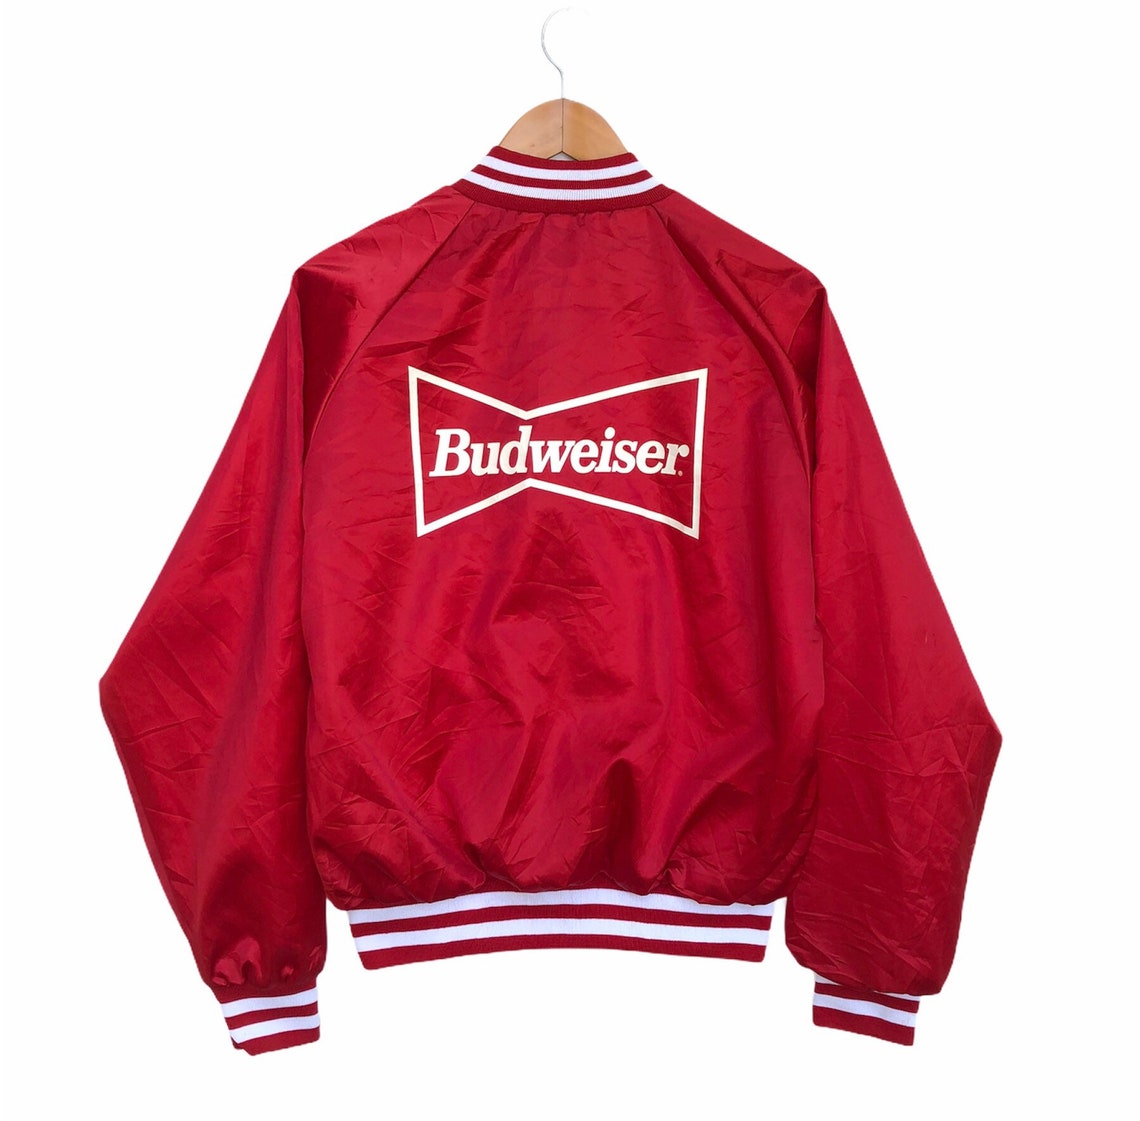 Vintage 80s Satin Red Budweiser Lightweight Bomber Jacket | Etsy